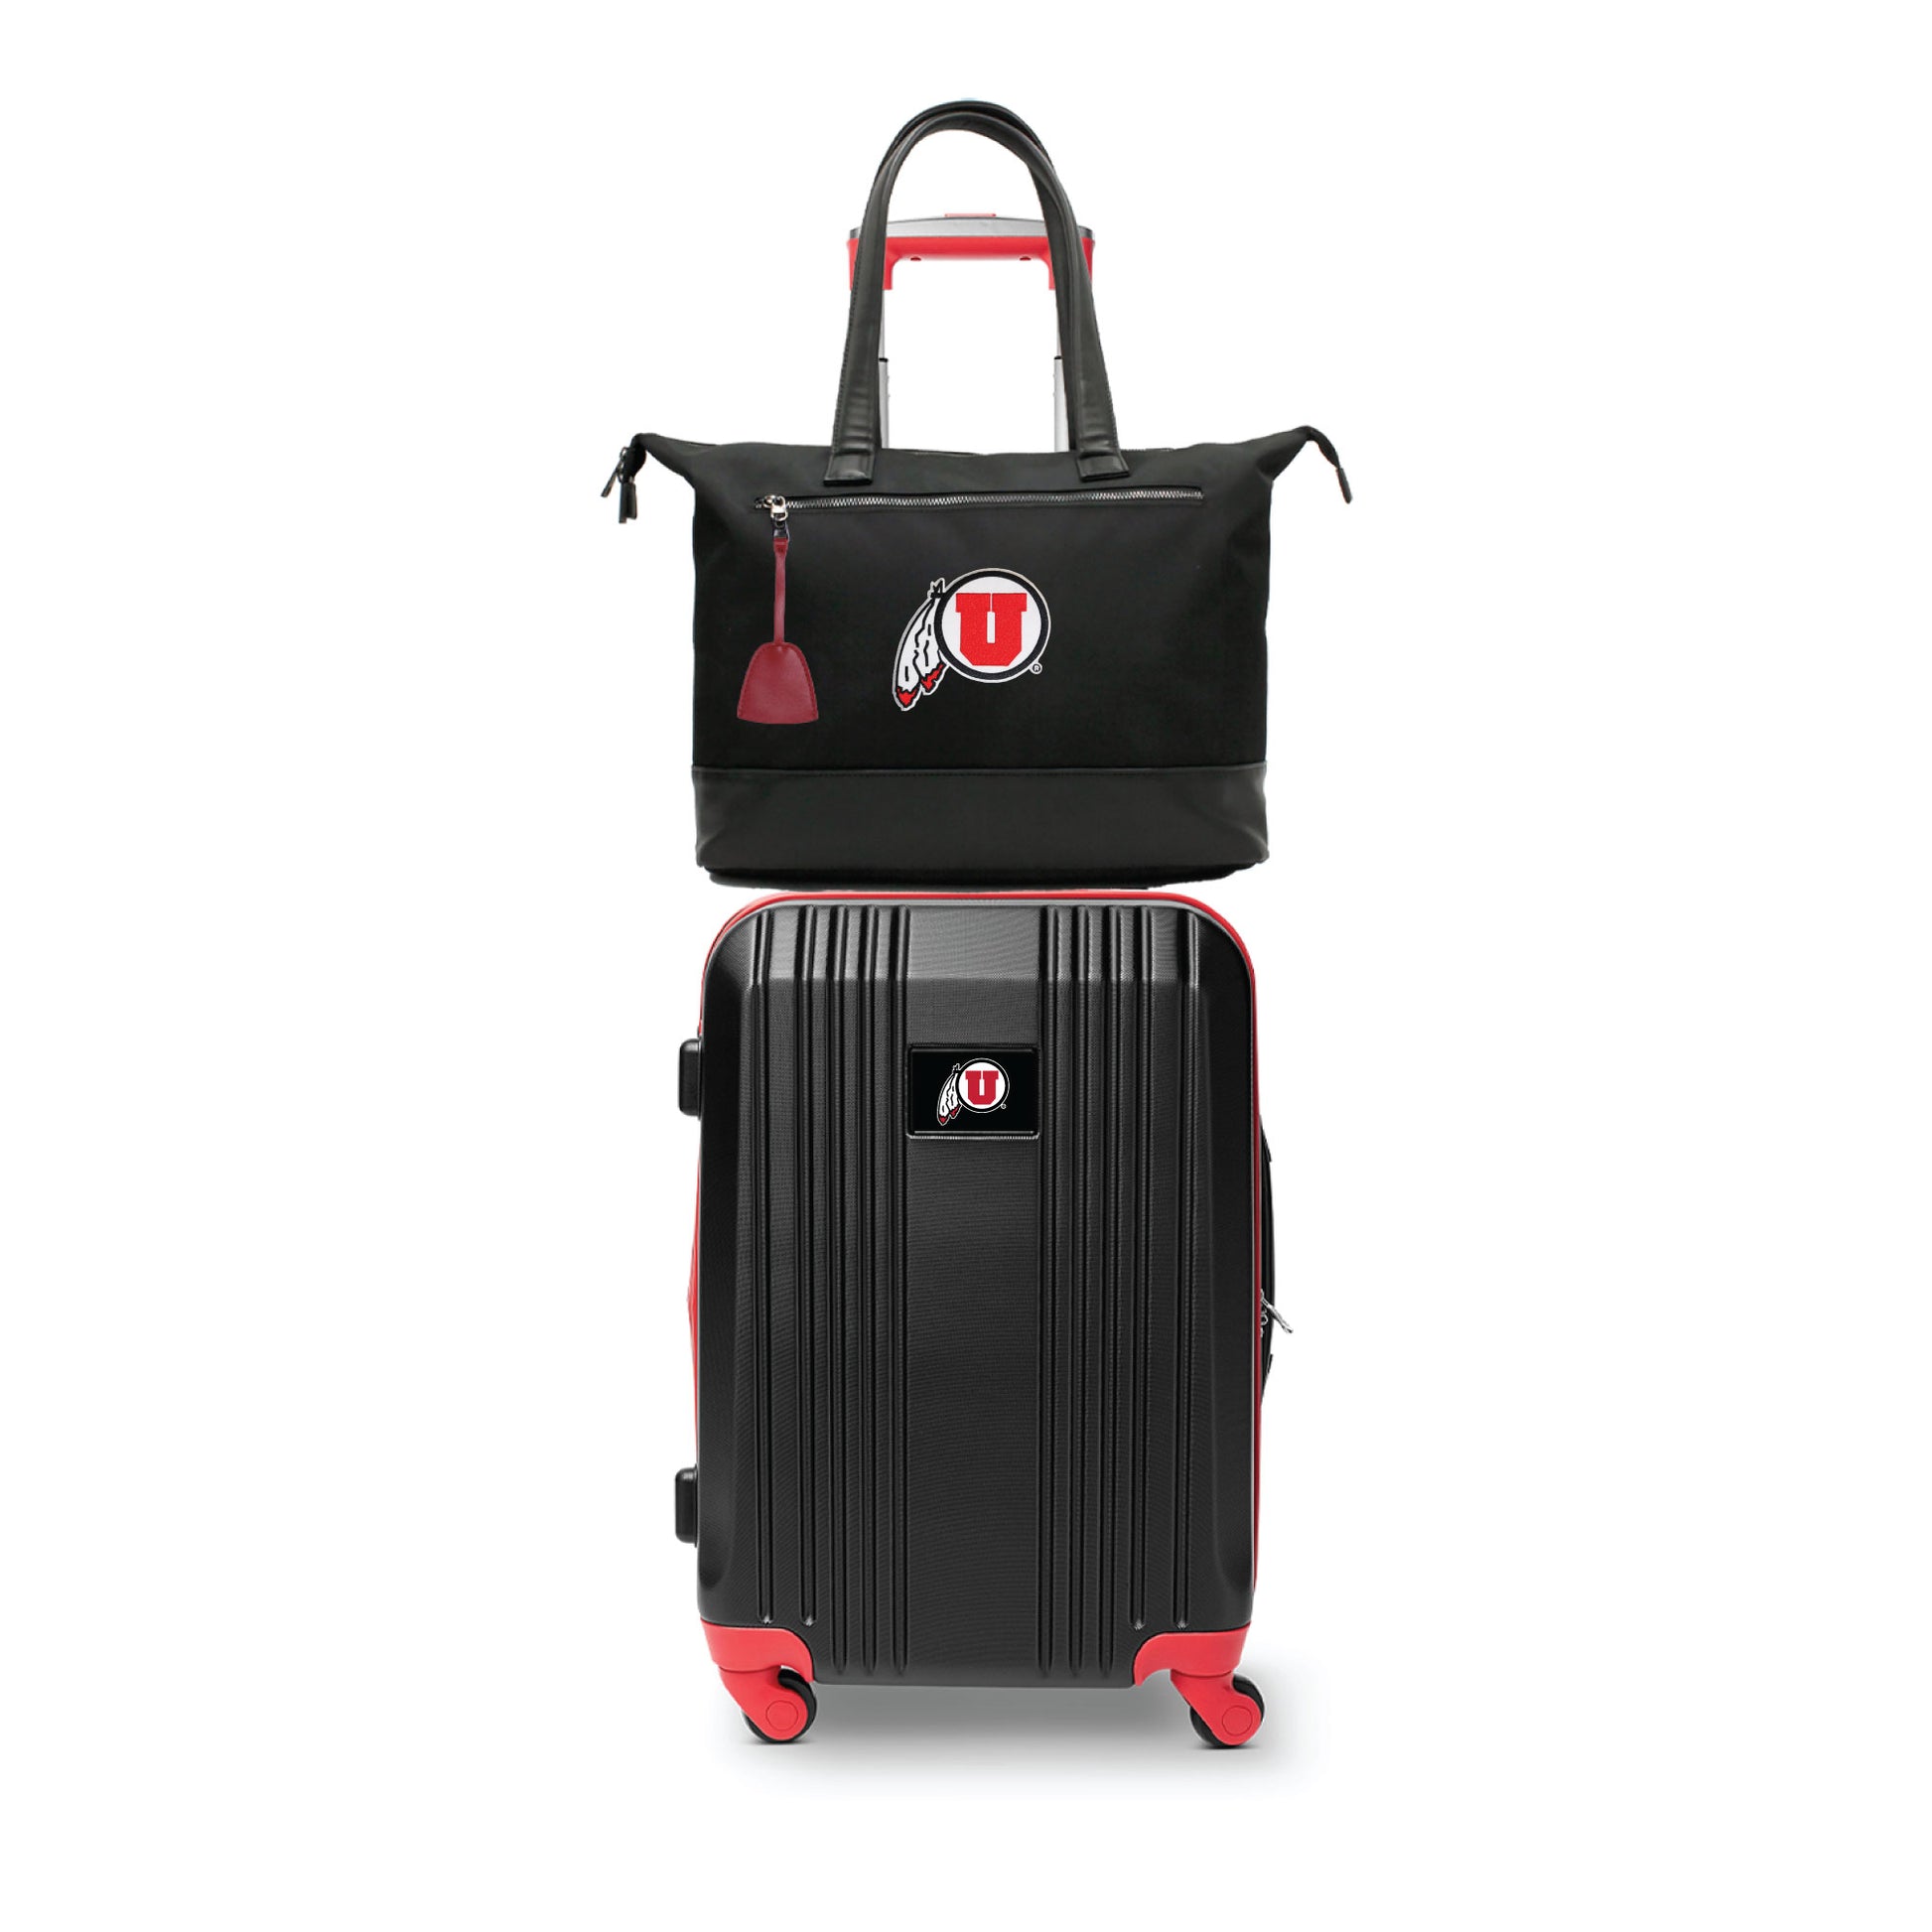 Utah Utes Premium Laptop Tote Bag and Luggage Set